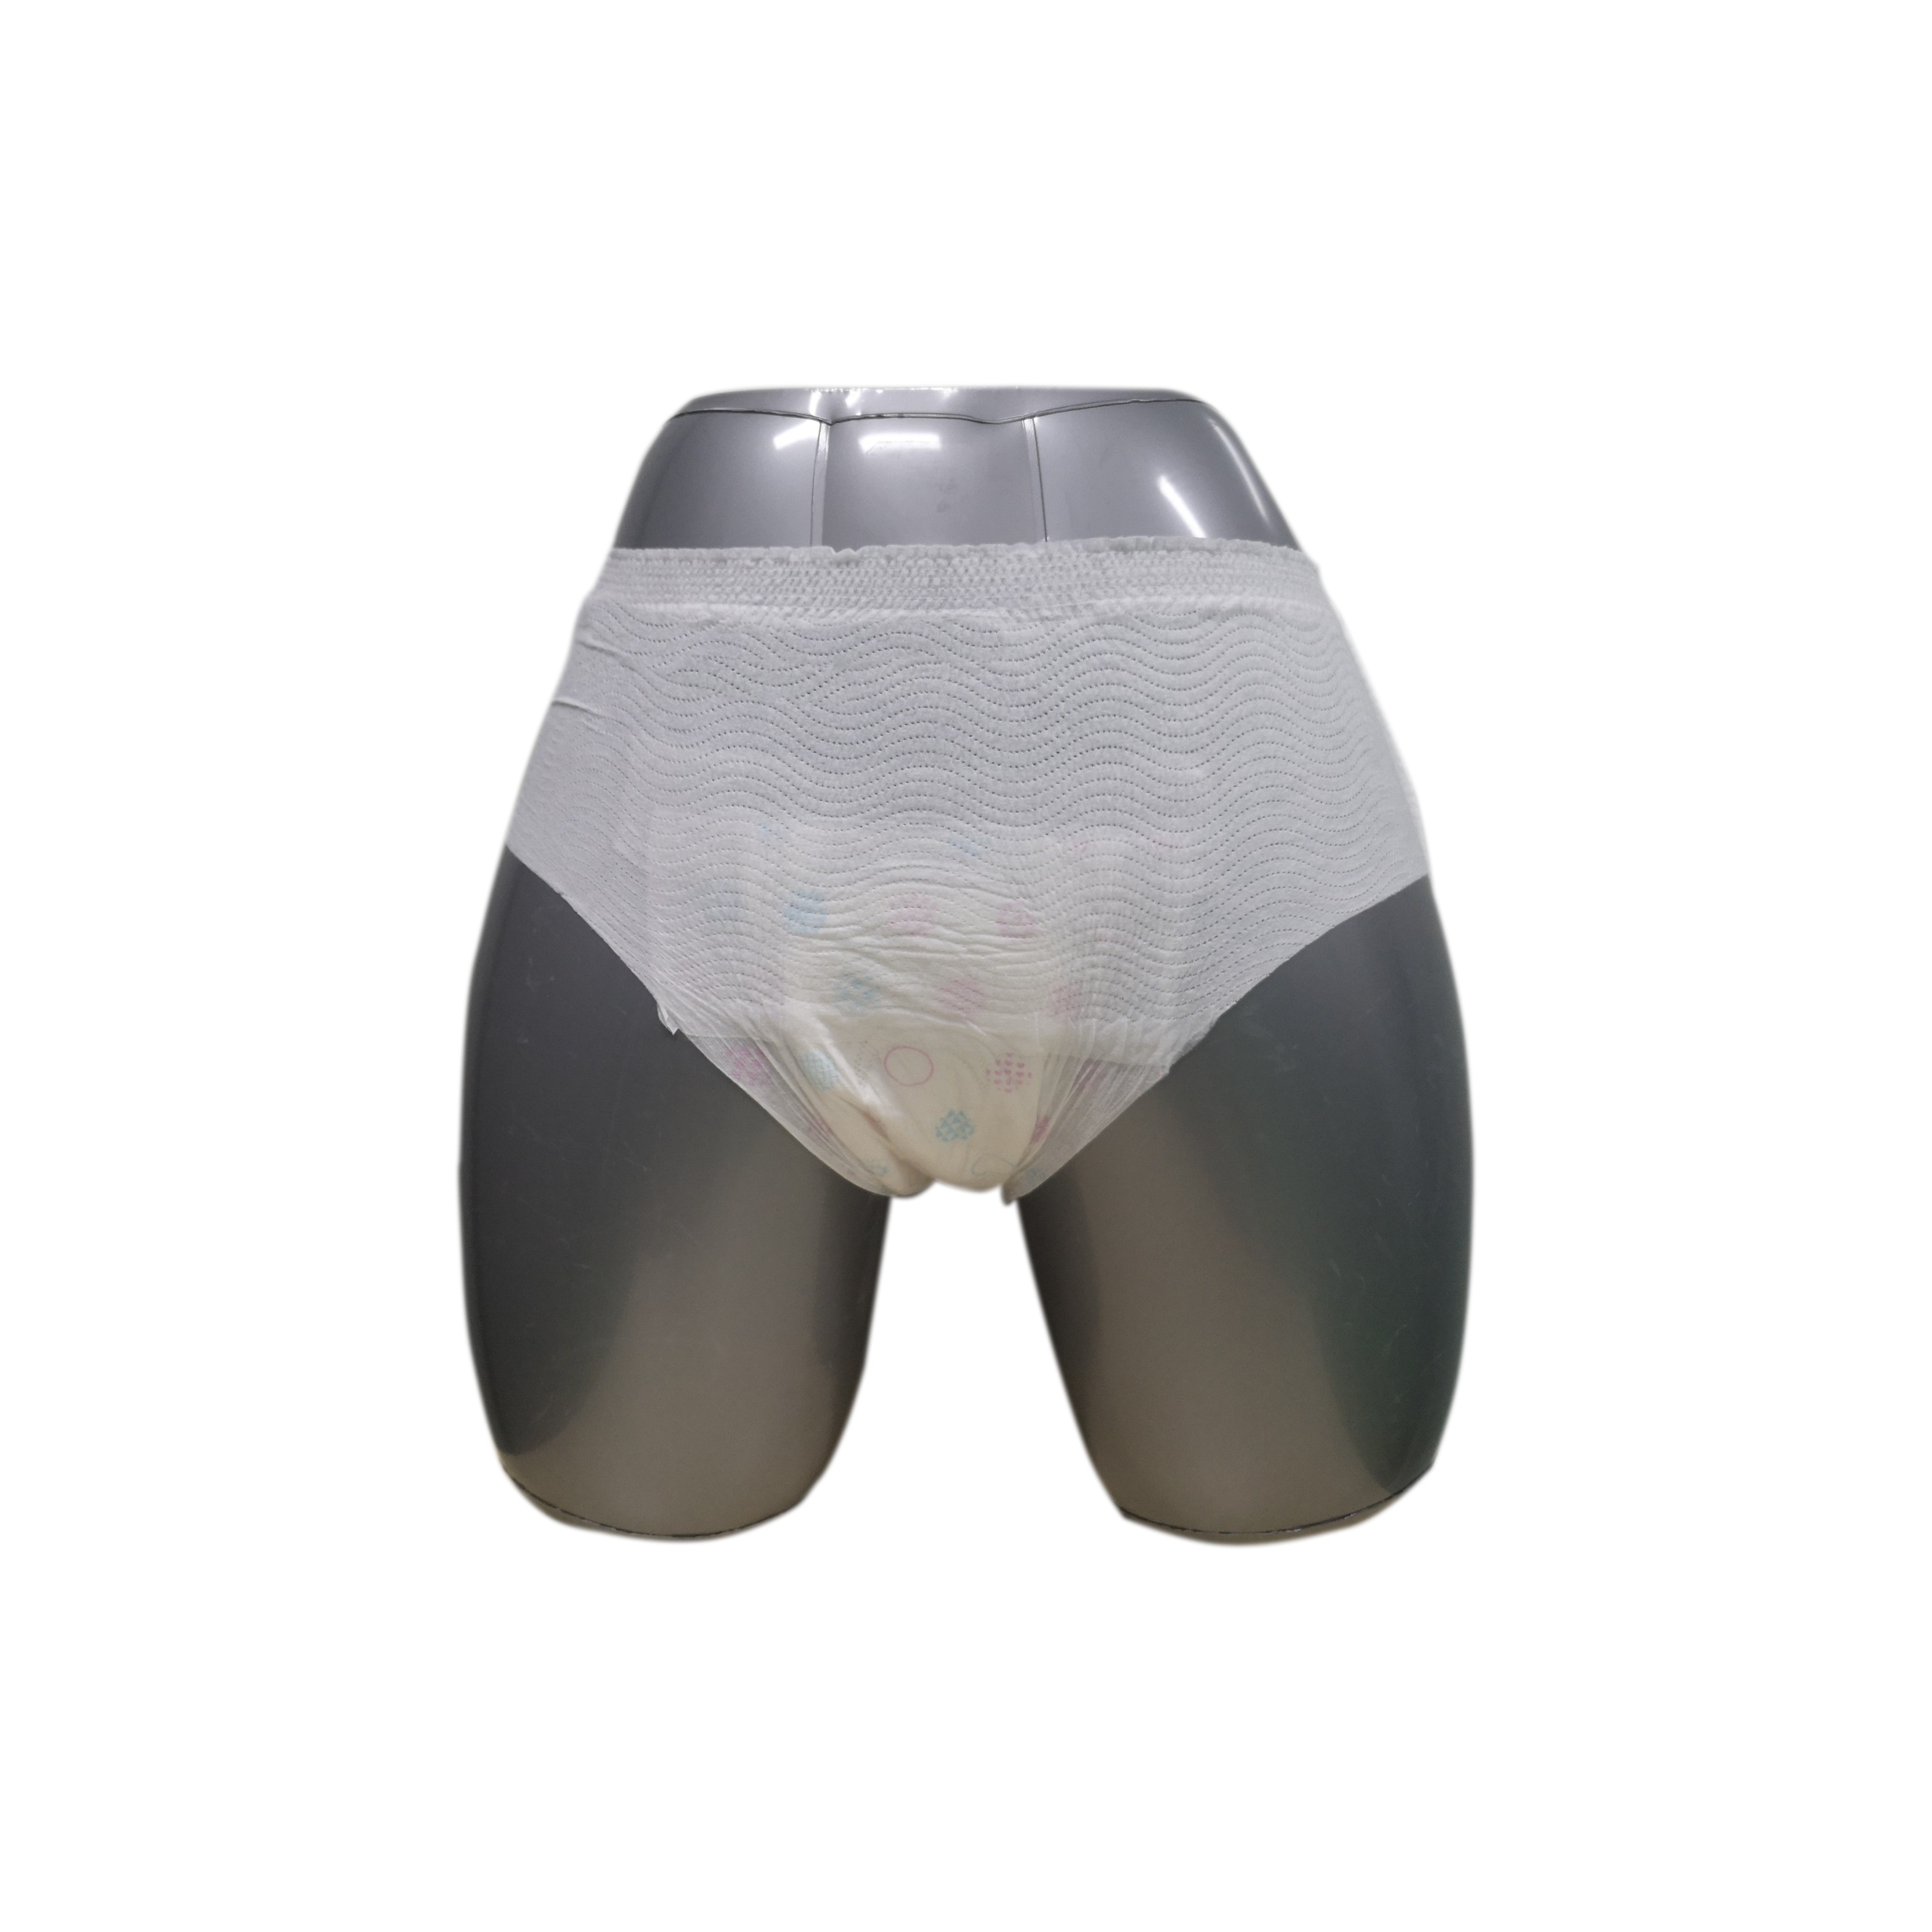 Trending Products Feminine Hygiene Pads - Dry surface lady menstrual periodic pants – Yoho